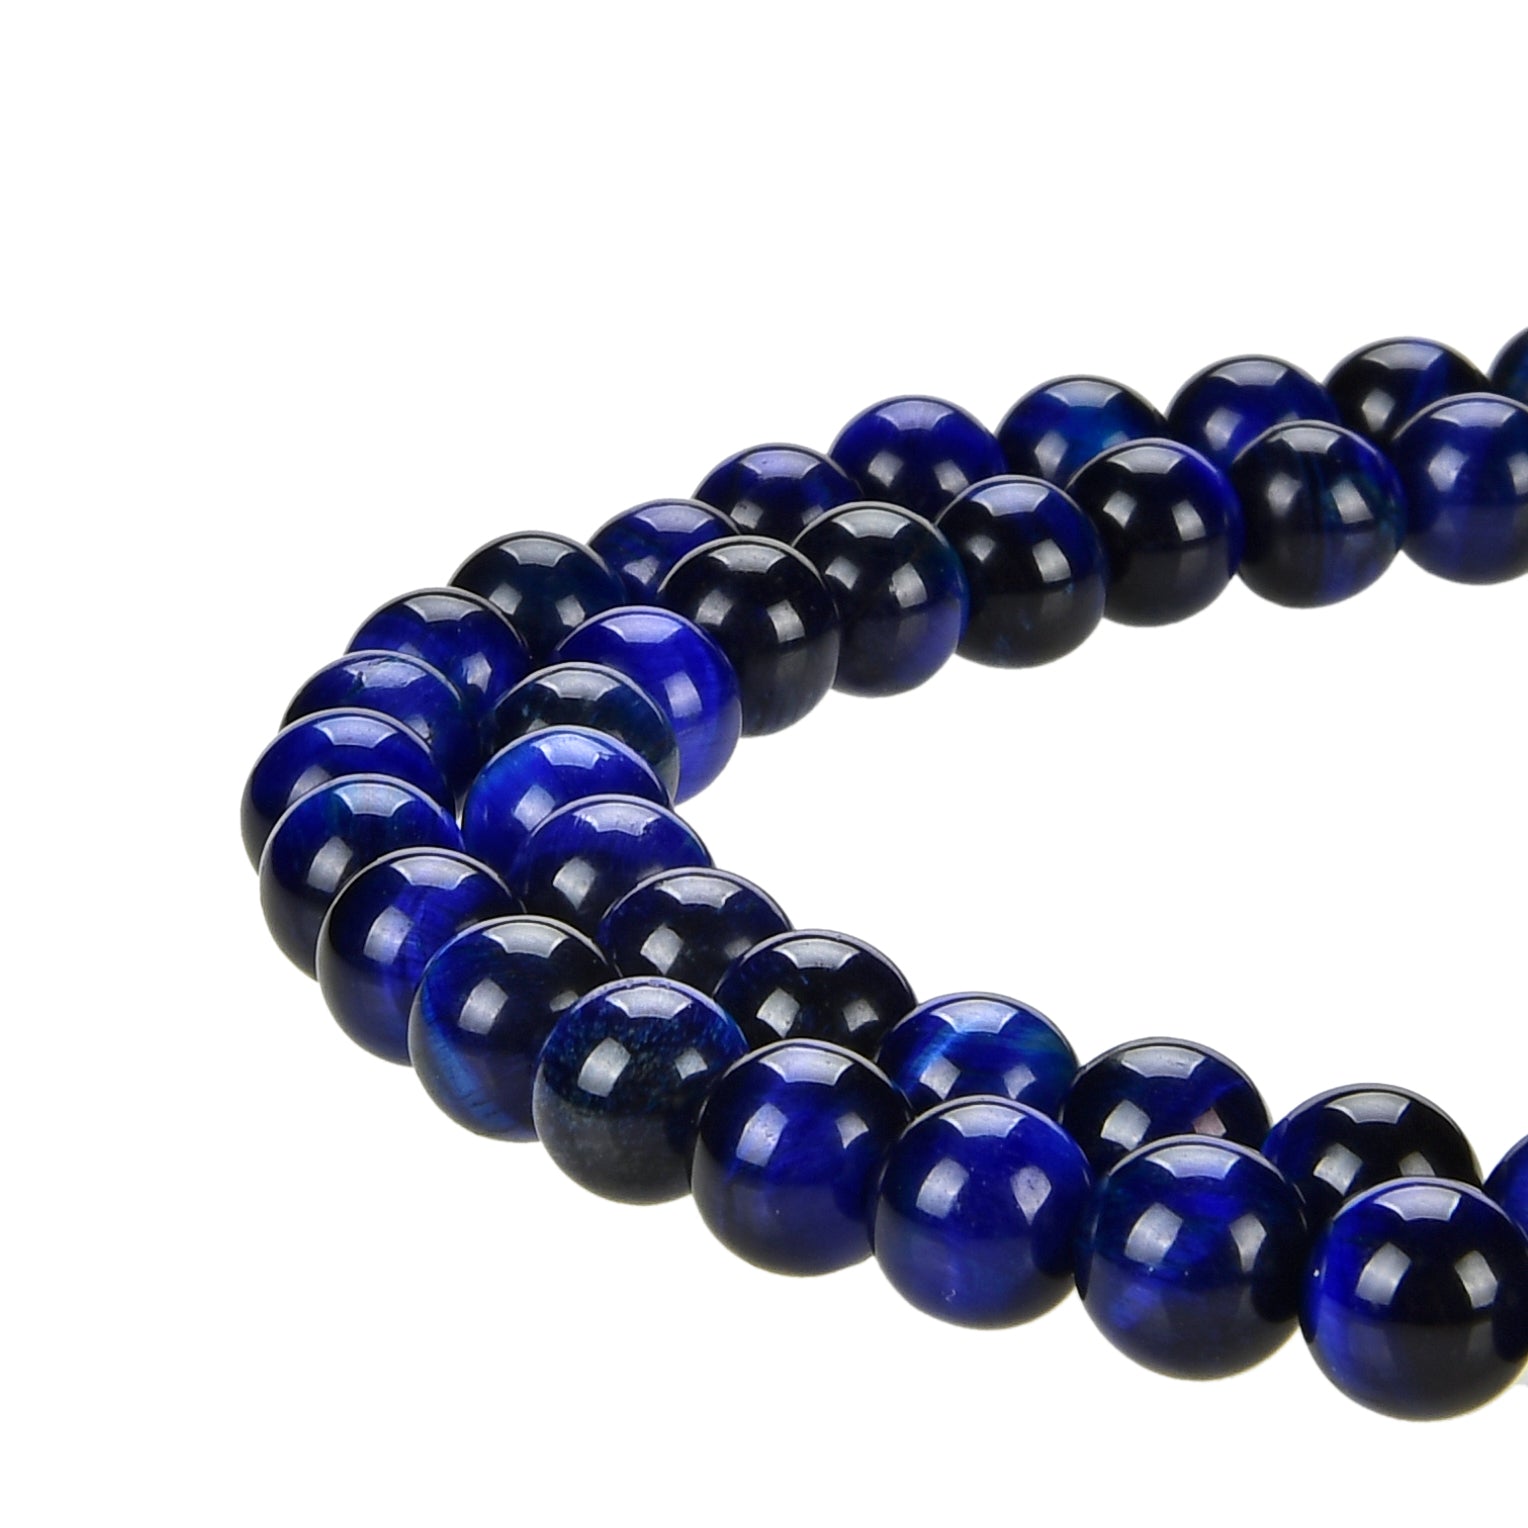 Blue Tiger Eye Gemstone Beads Round